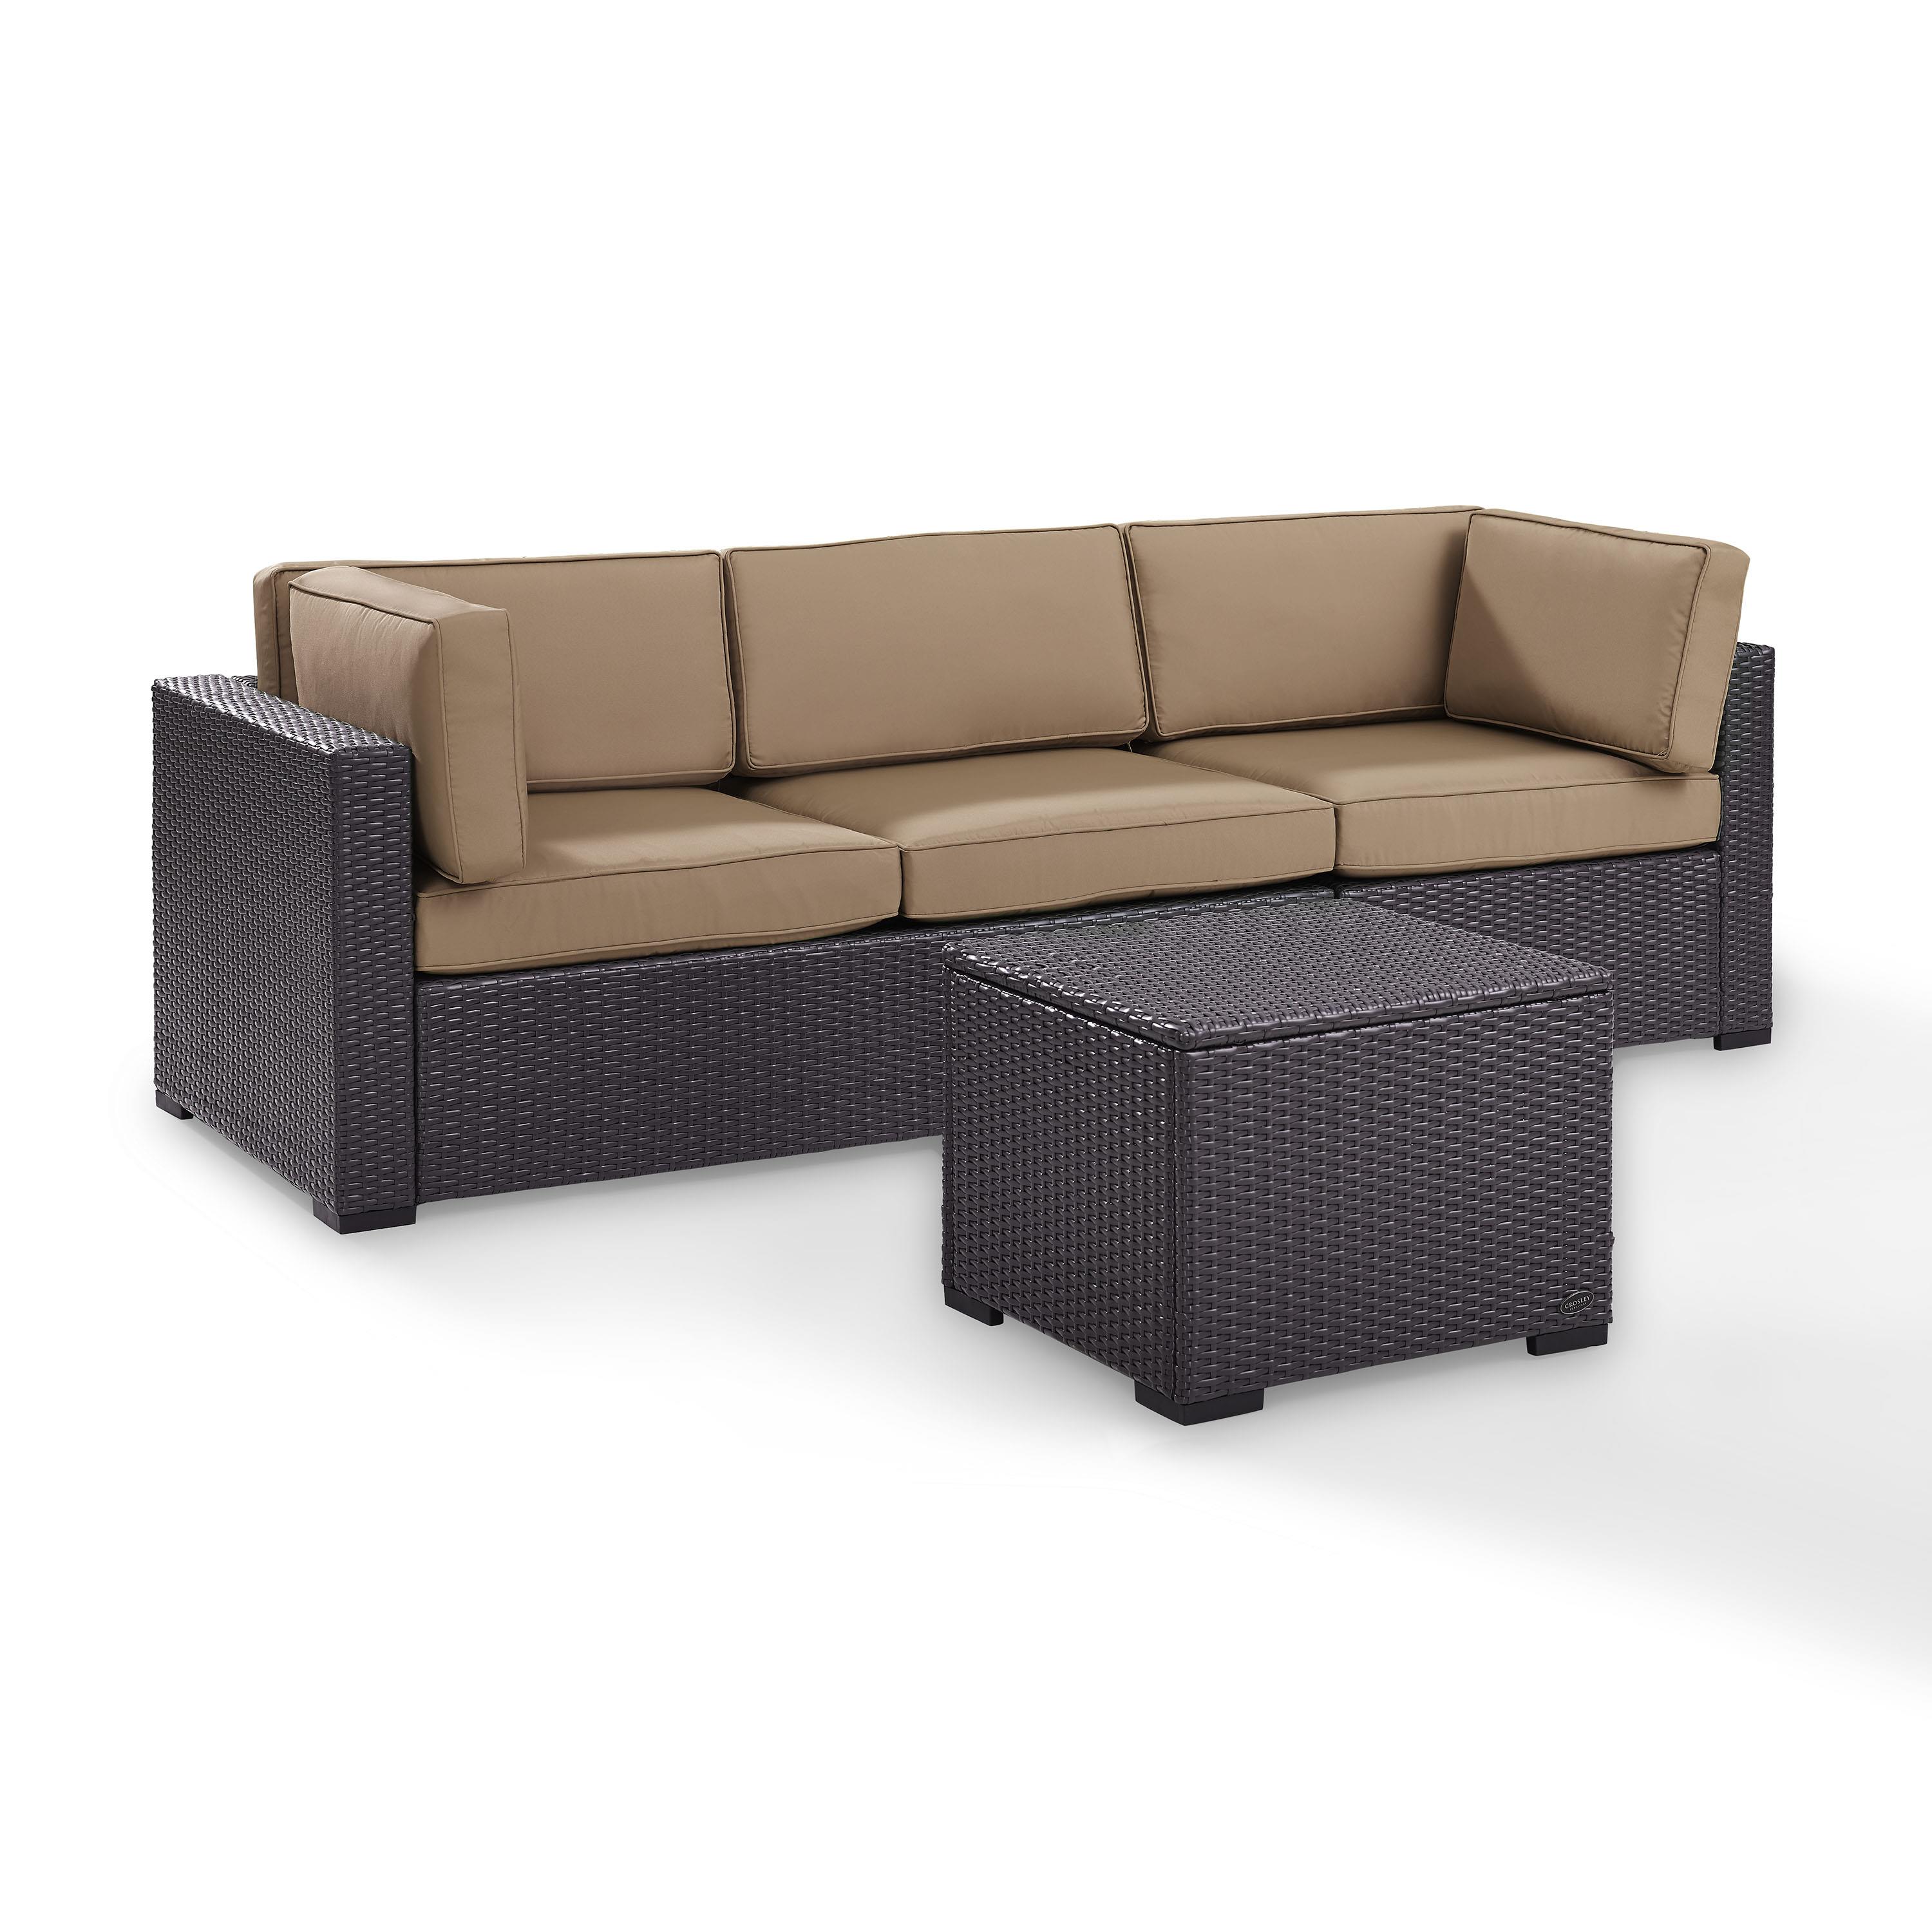 Crosley Furniture Biscayne 3 Piece Metal Patio Sofa Set in Brown/Mocha - image 2 of 4